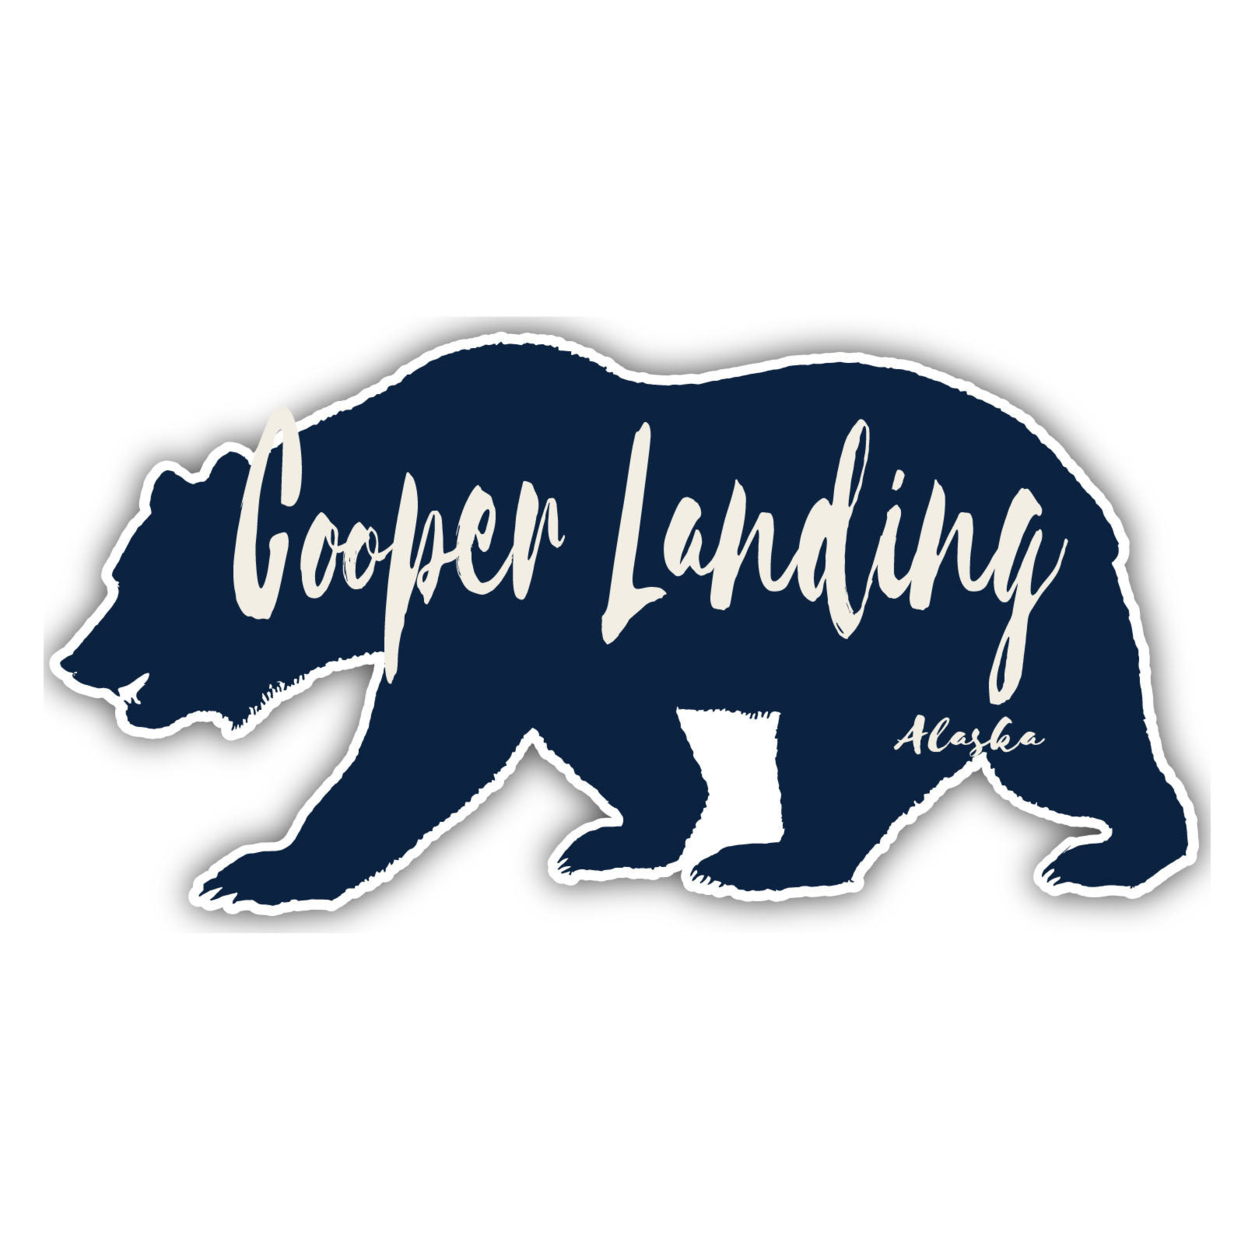 Cooper Landing Alaska Souvenir Decorative Stickers (Choose Theme And Size) - Single Unit, 6-Inch, Adventures Awaits